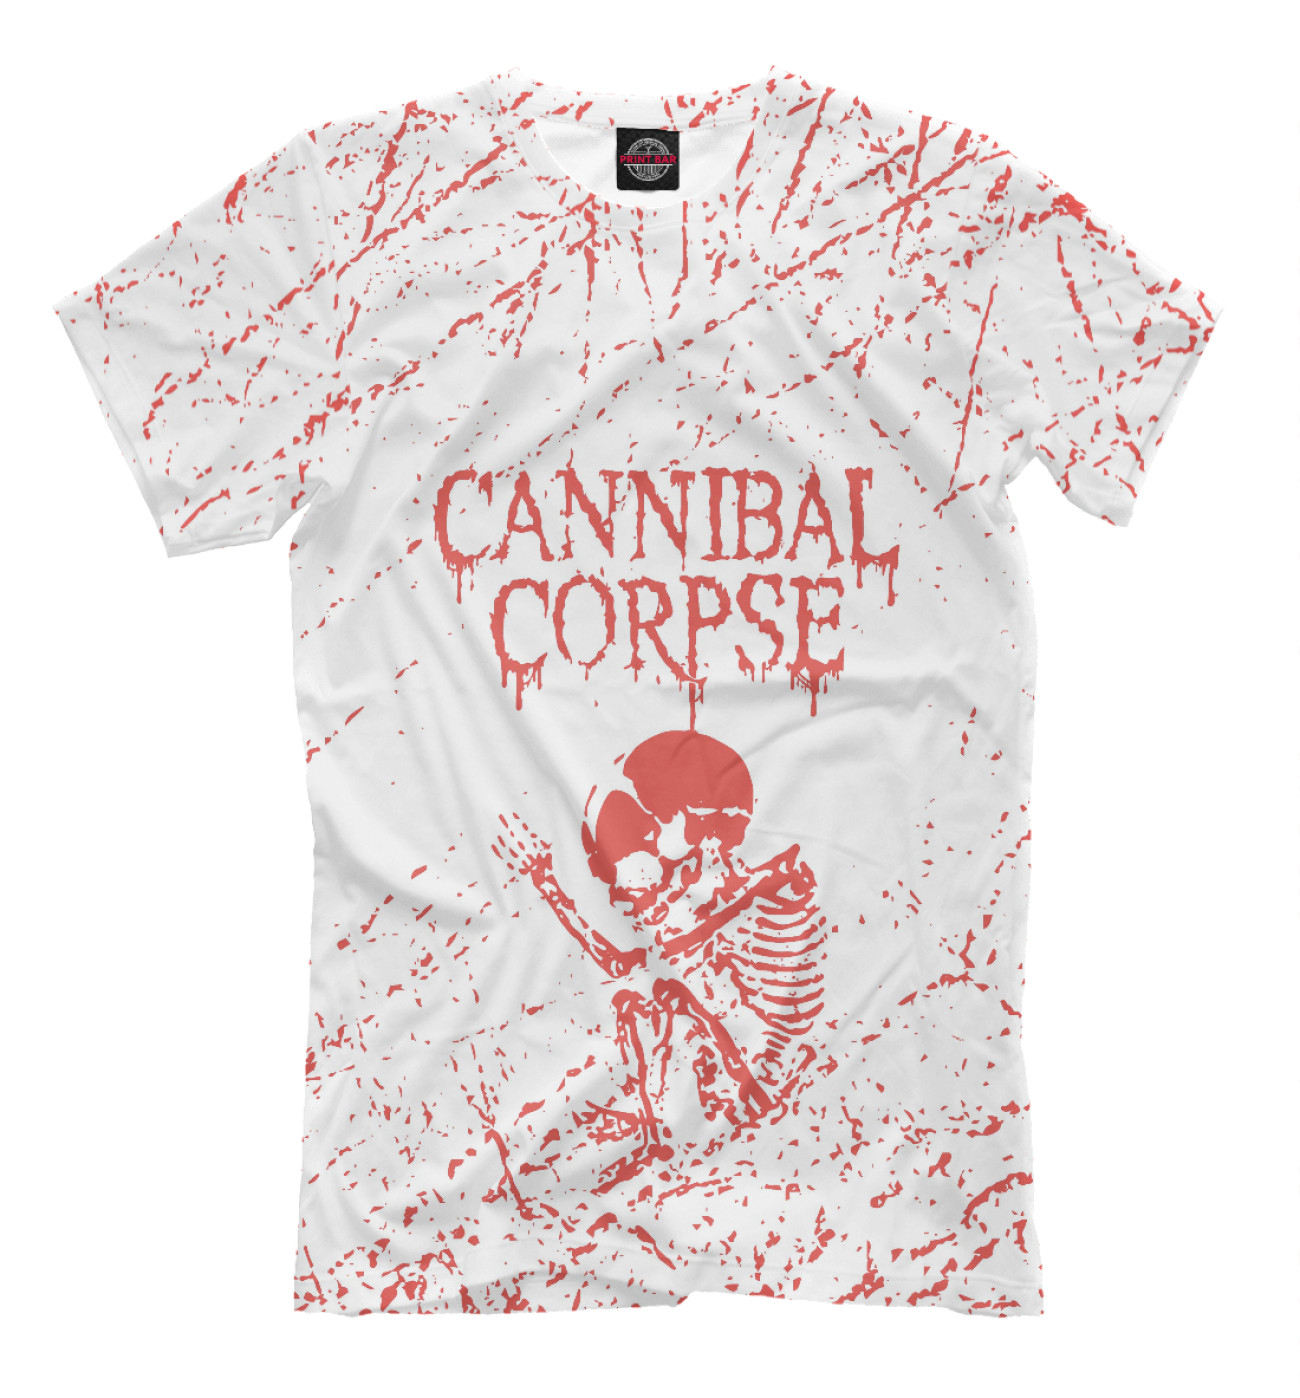 Мужская Футболка Cannibal corpse, артикул: CCR-172004-fut-2